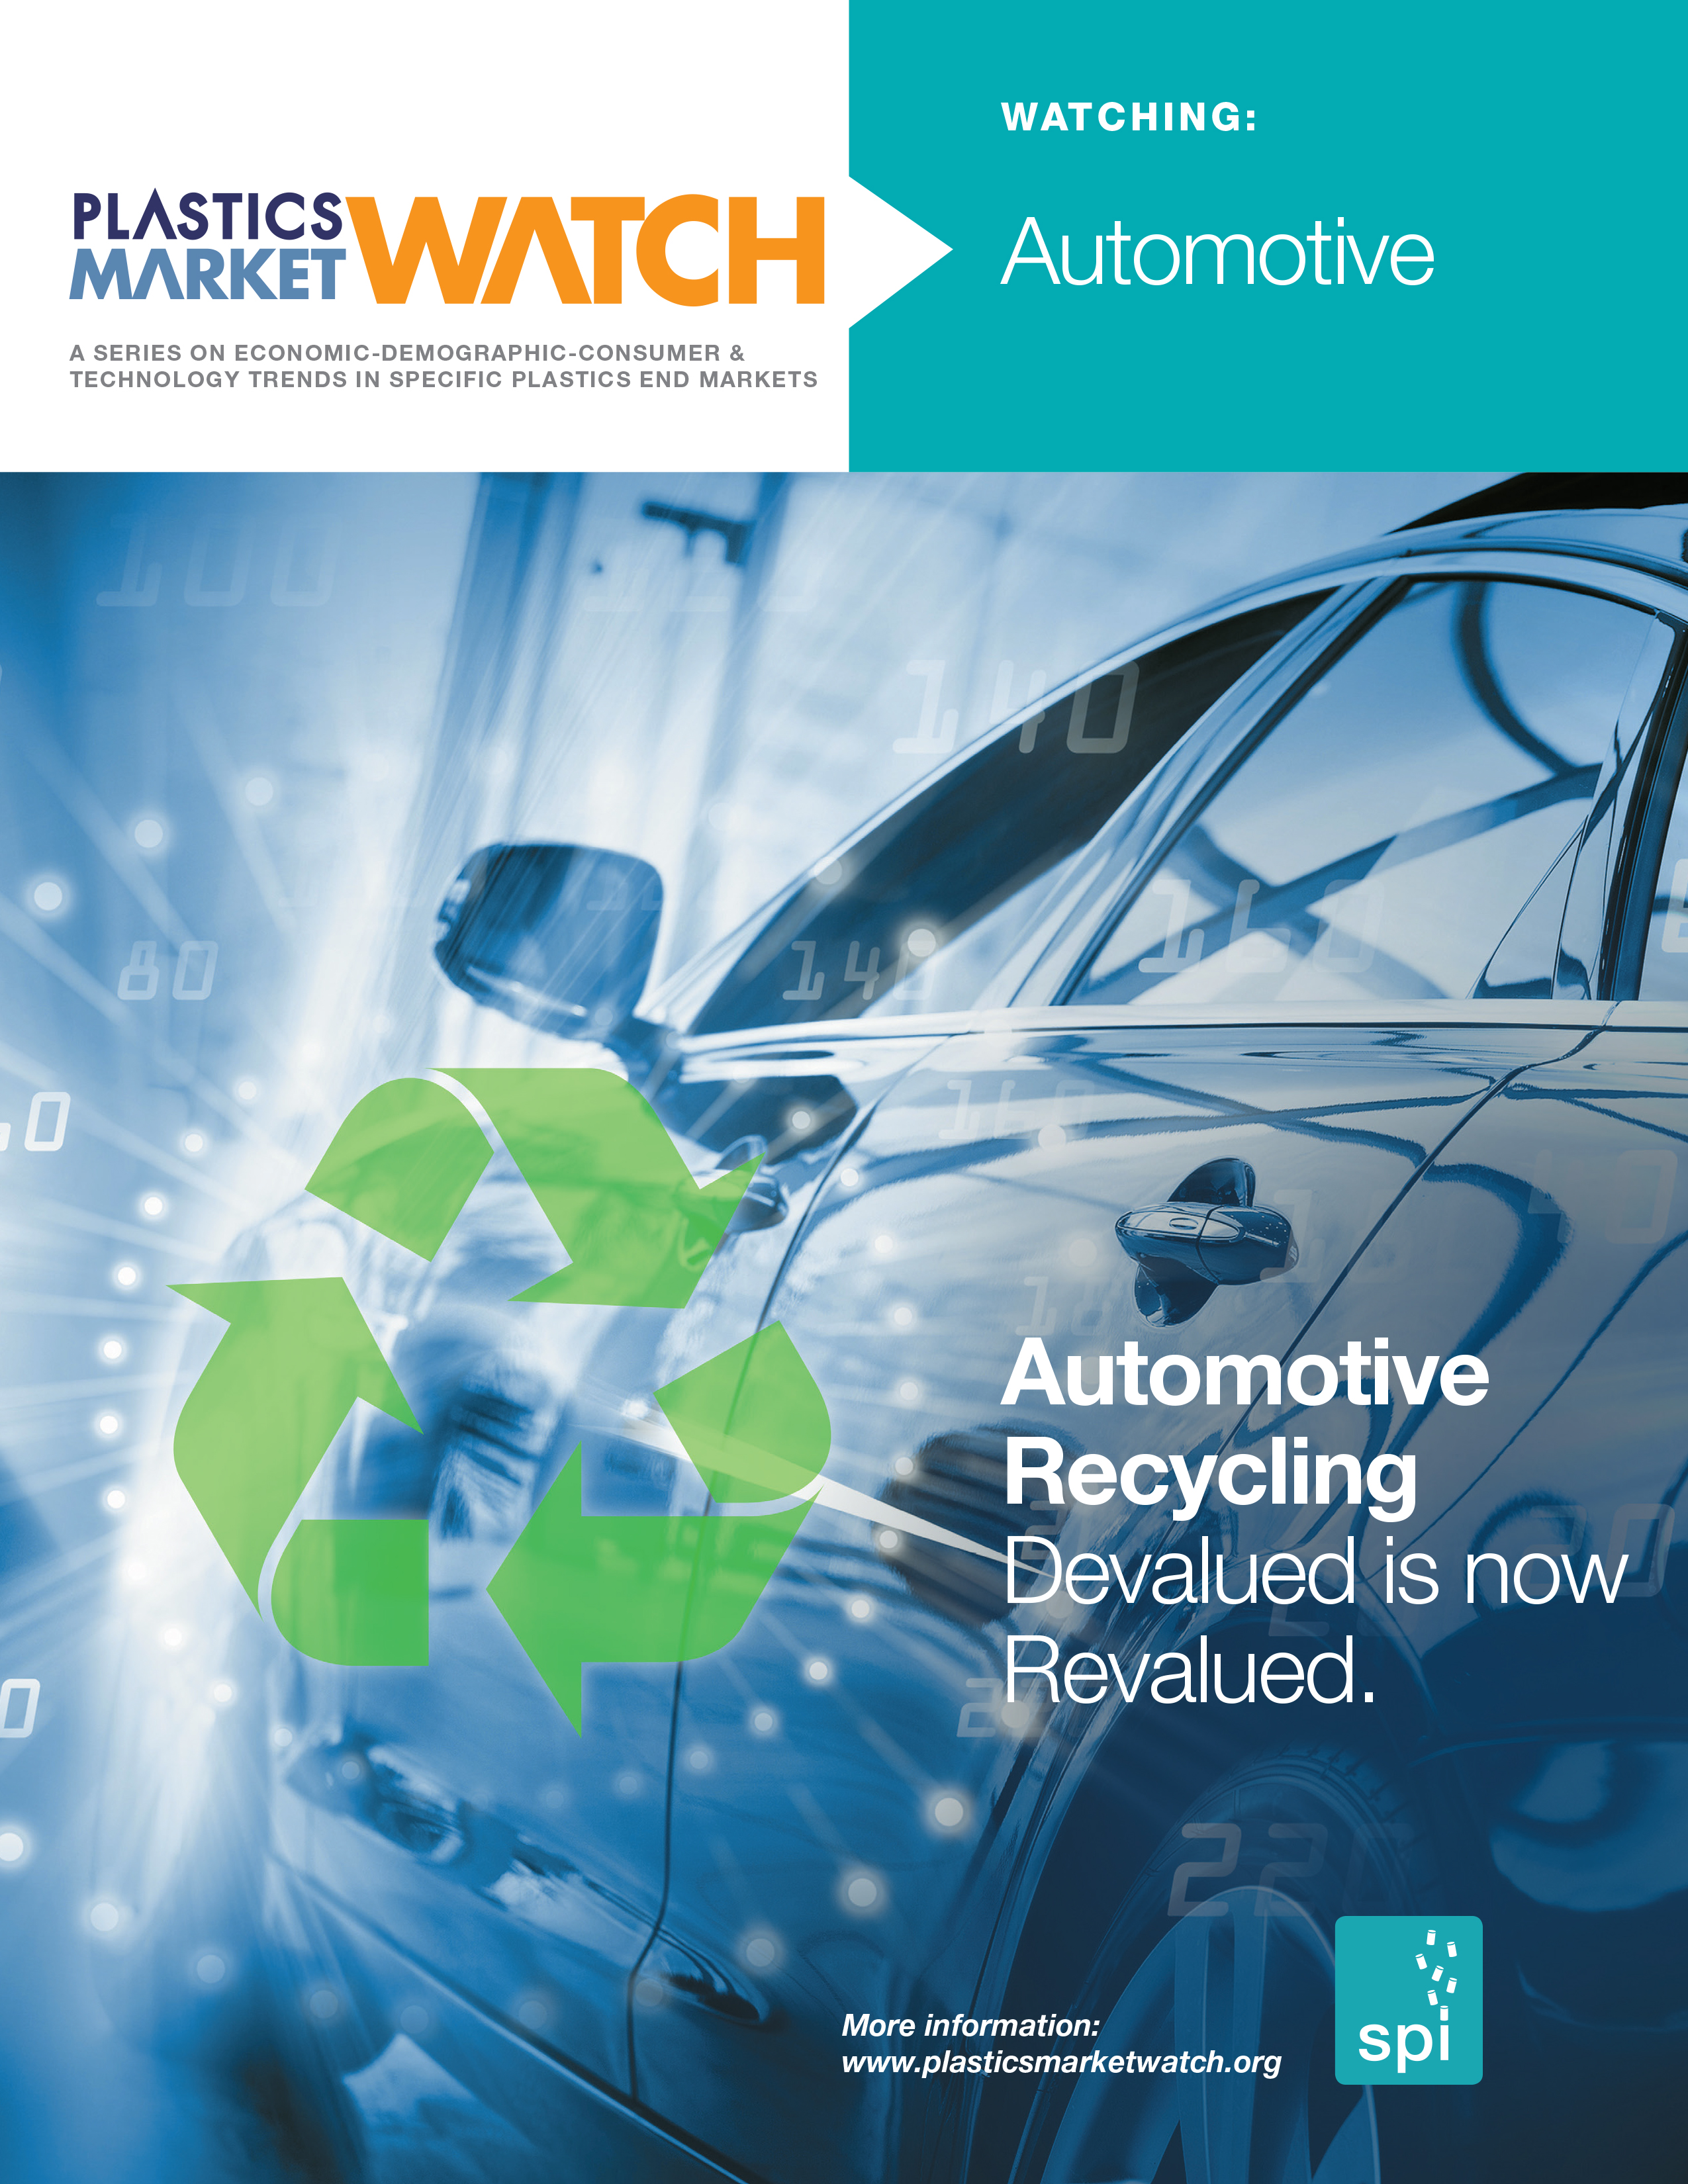 Plastics Market Watch: Automotive Recycling